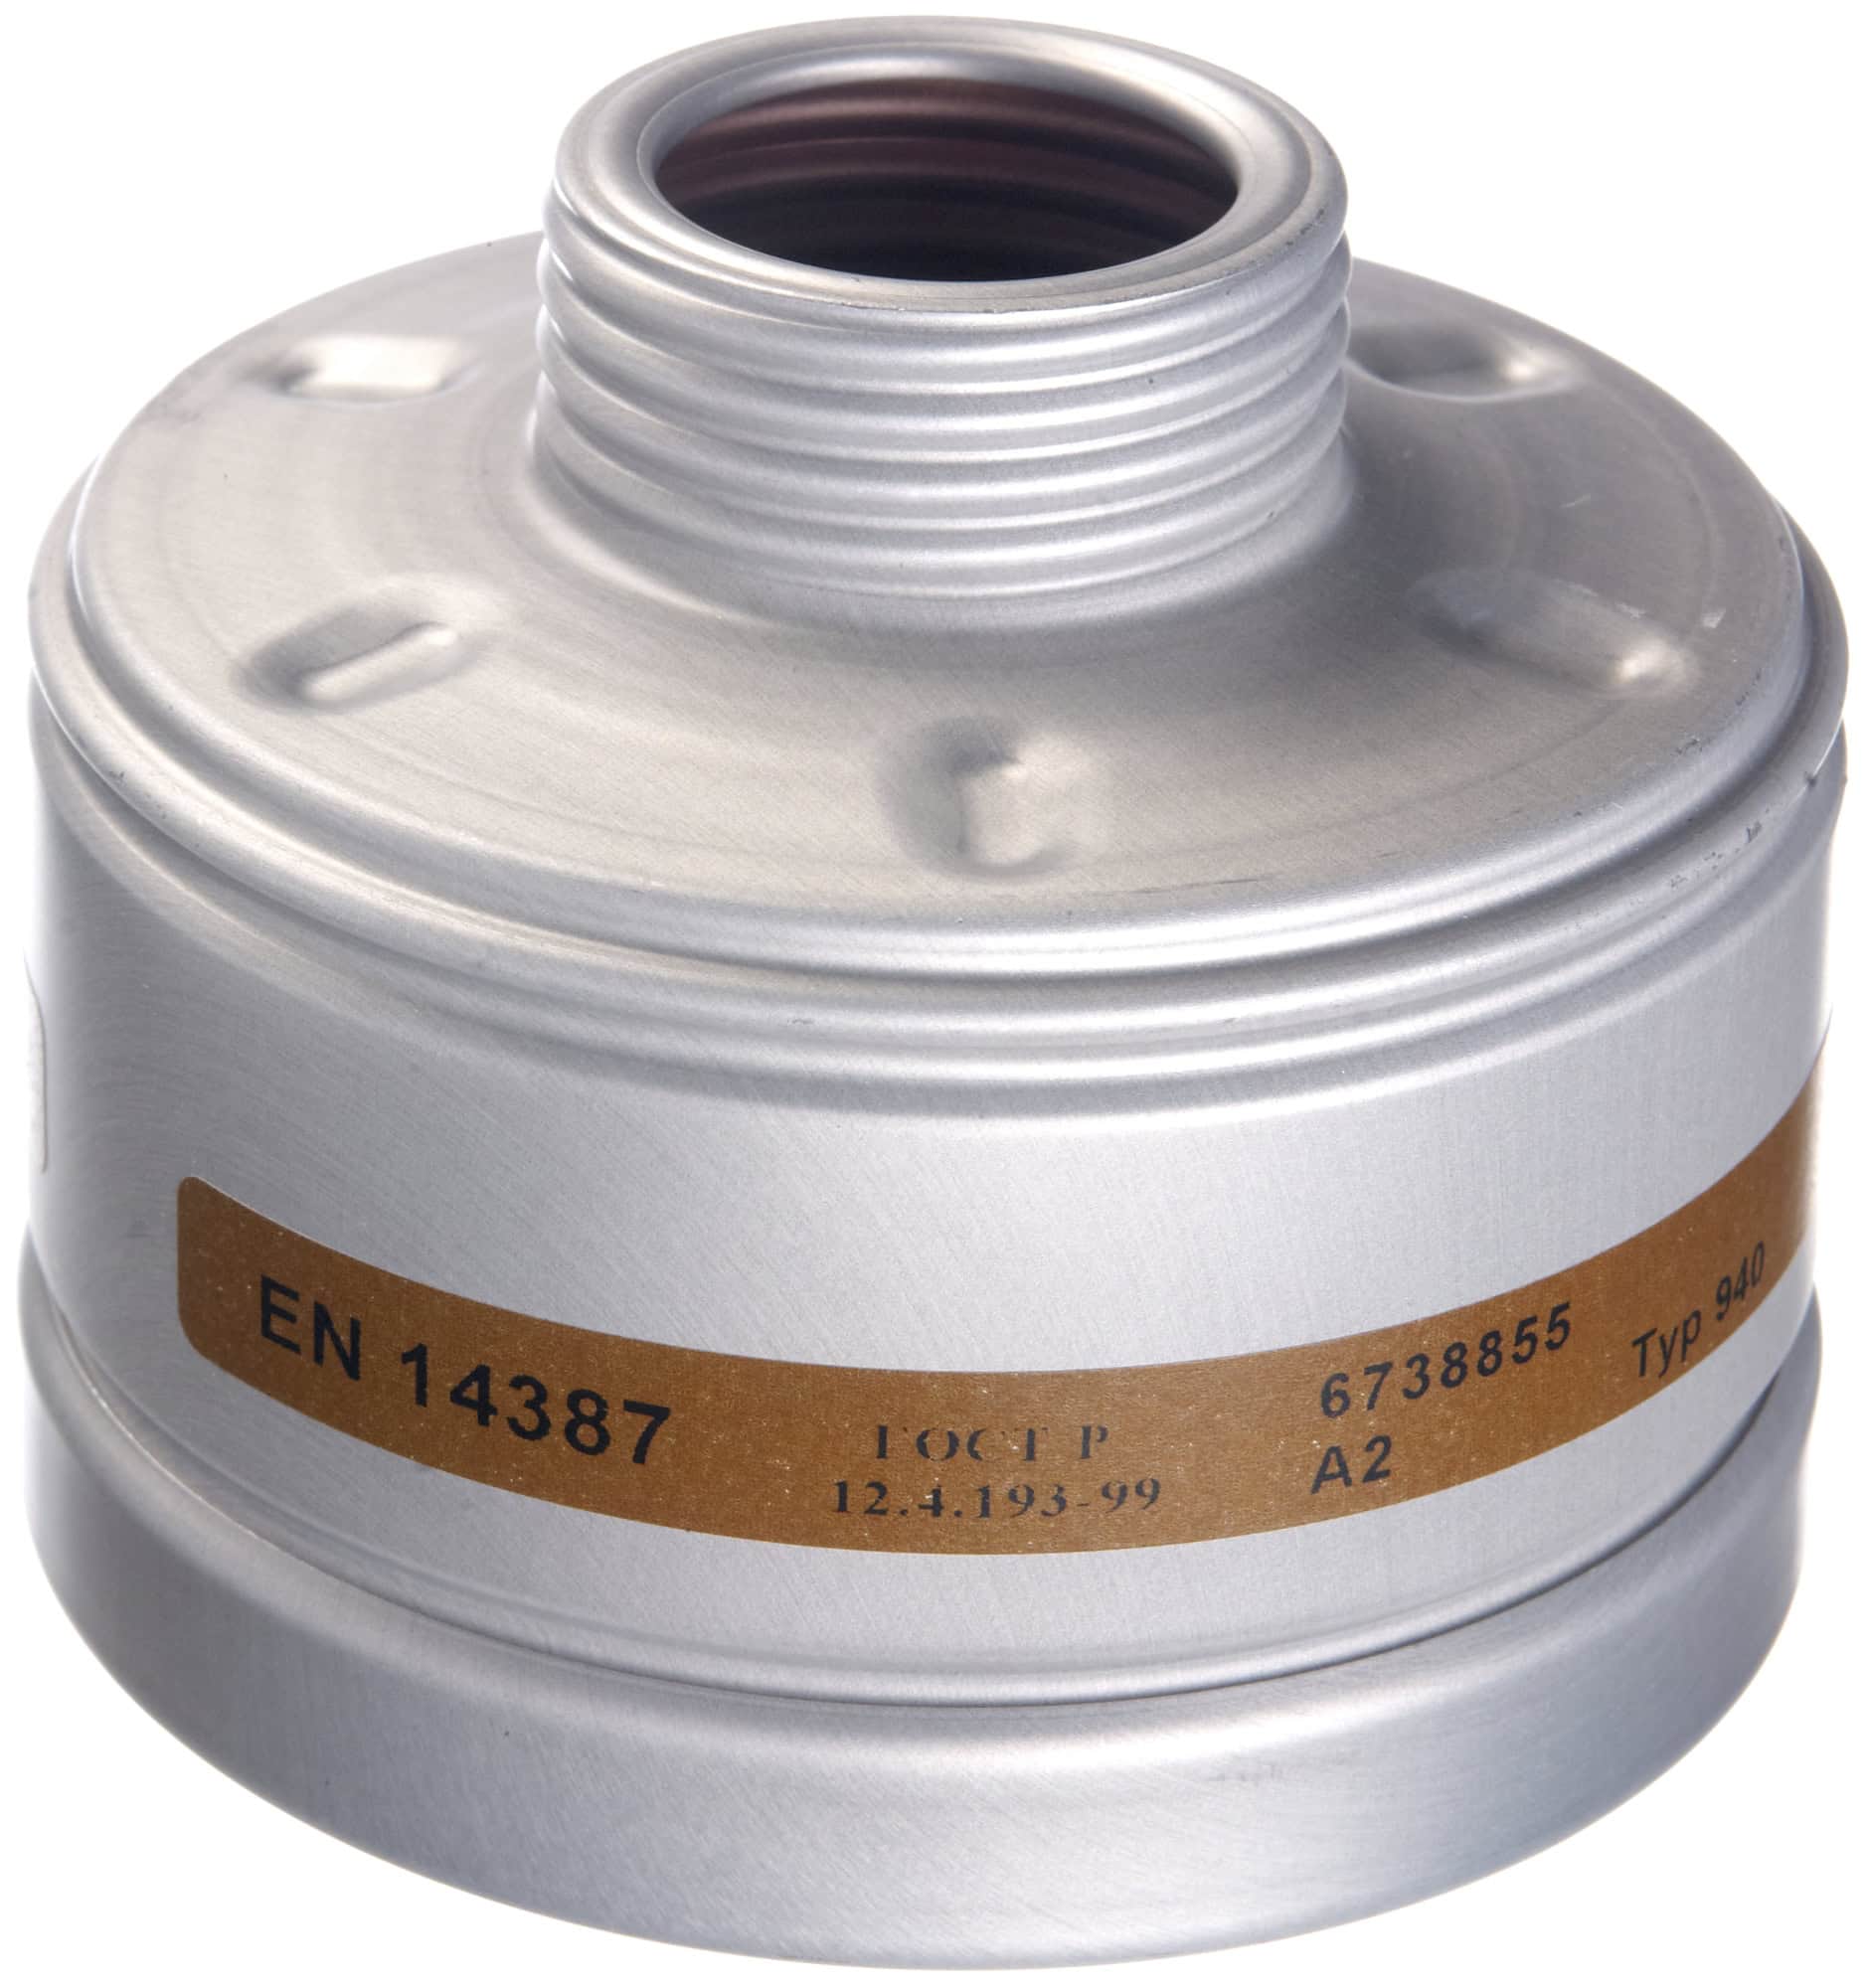 Dräger® X-plore® RD40 Gasfilter 940, 6738855, A2 R, 40 mm Rundfilteranschluss [NATO Standard], Gasfilter gegen organische Gase & Dämpfe